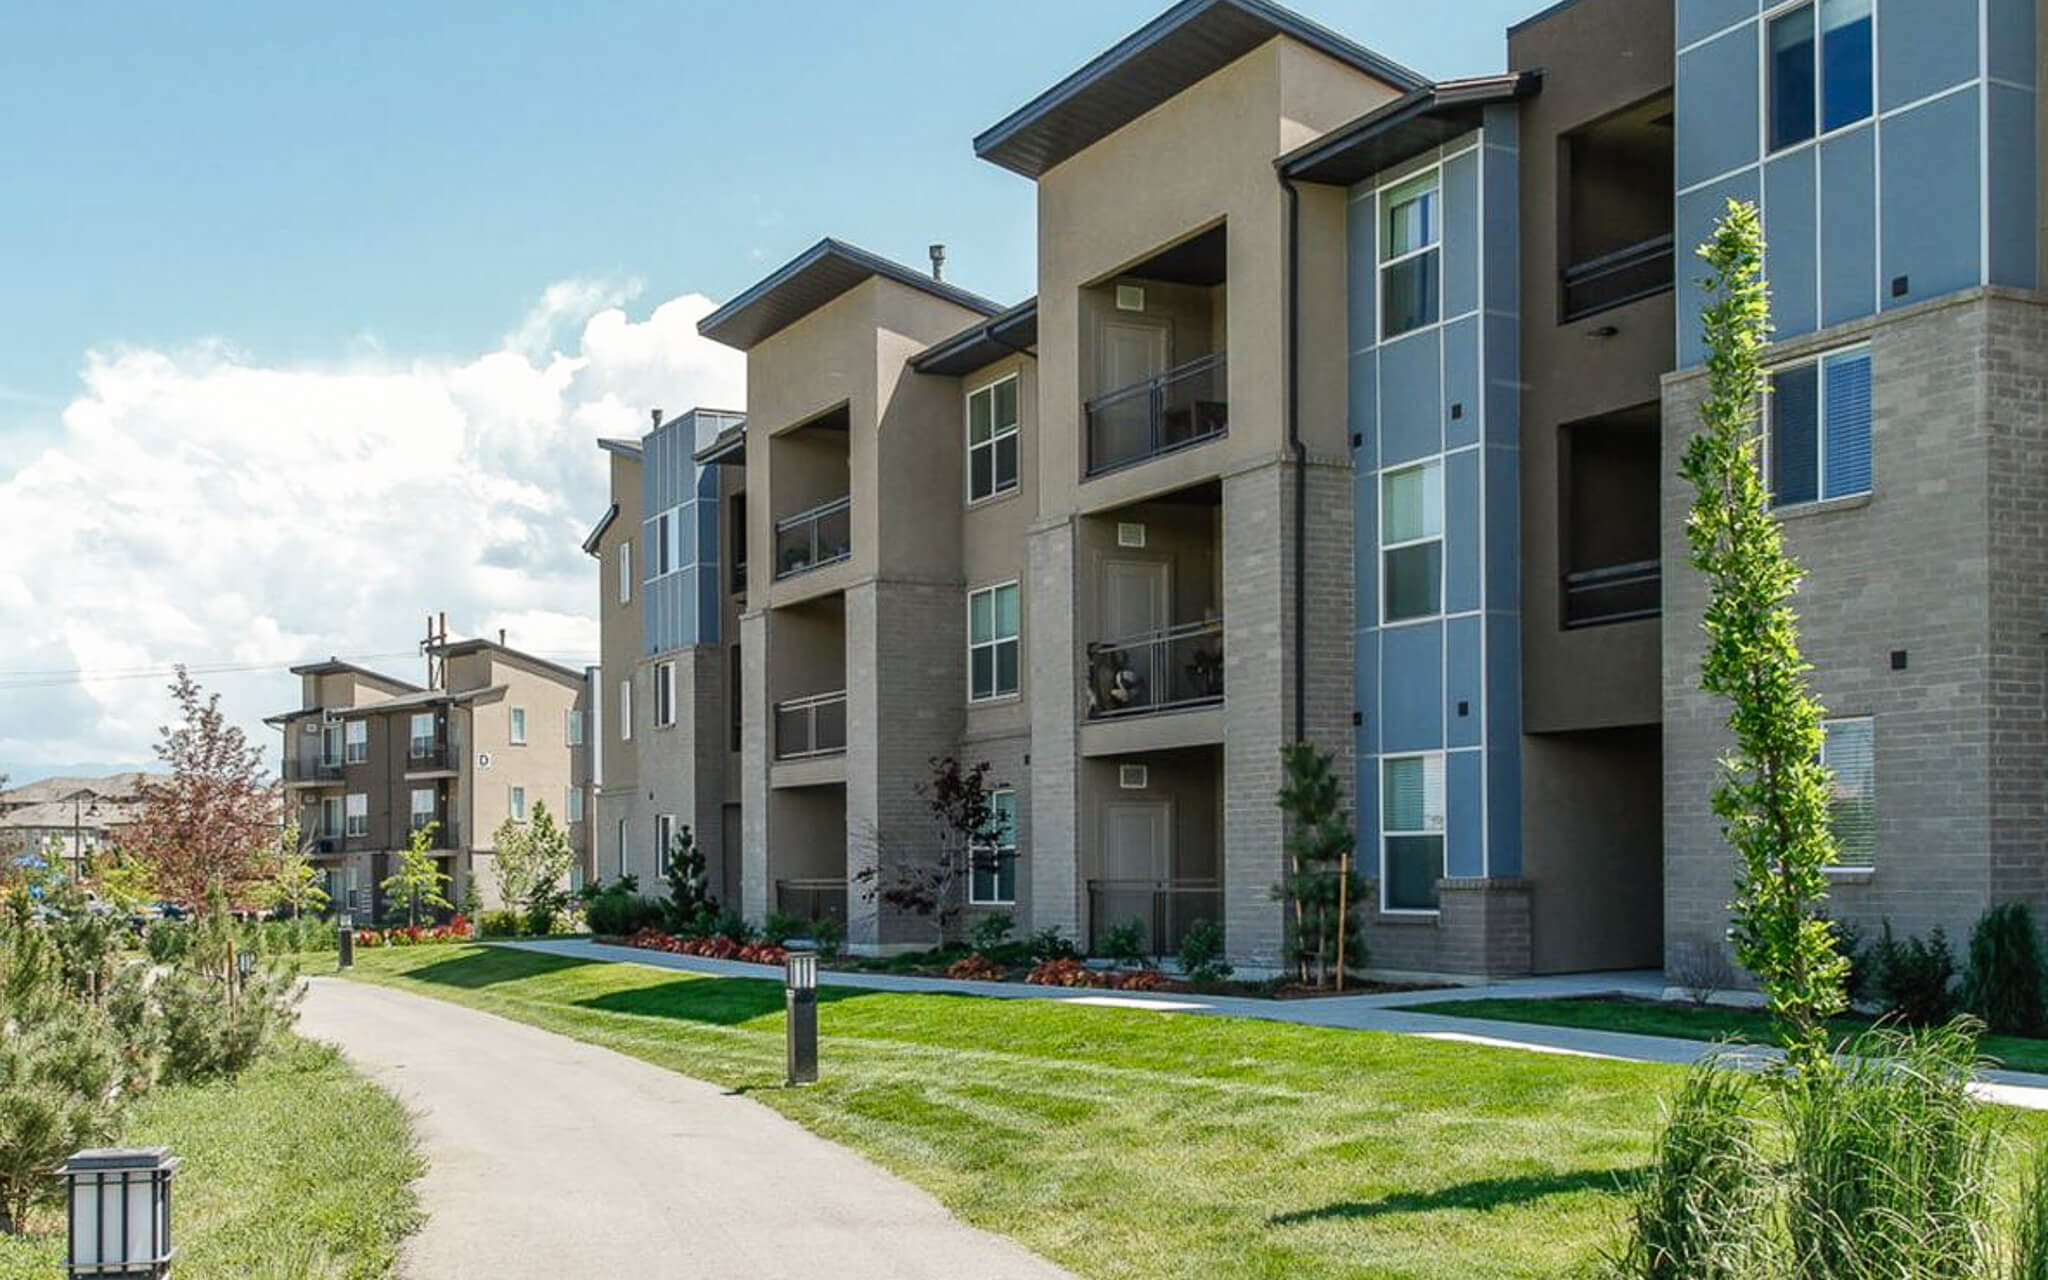 Paragon Corporate Housing - The Lofts at 7000 Apartments - Midvale Utah